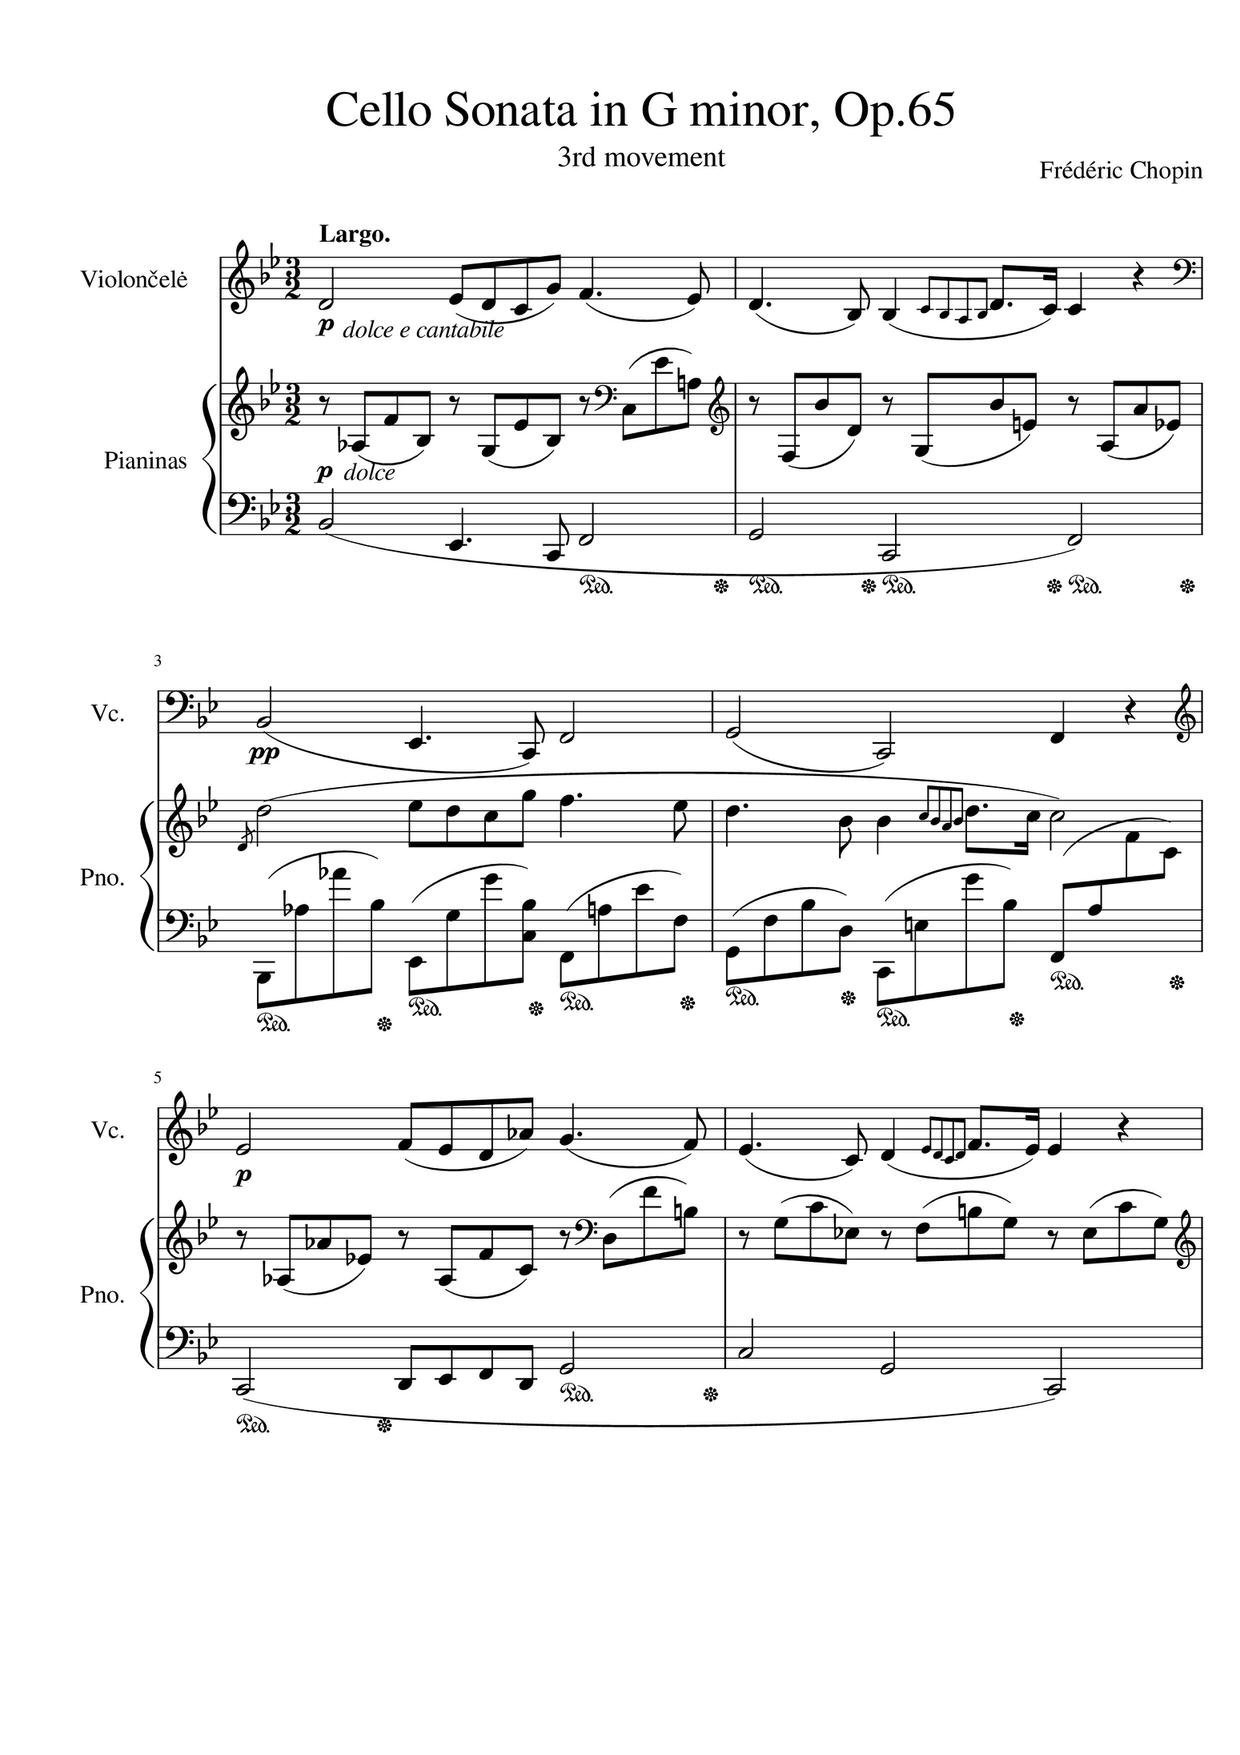 Cello Sonata in G Minor, Op. 65: III. Largo琴谱